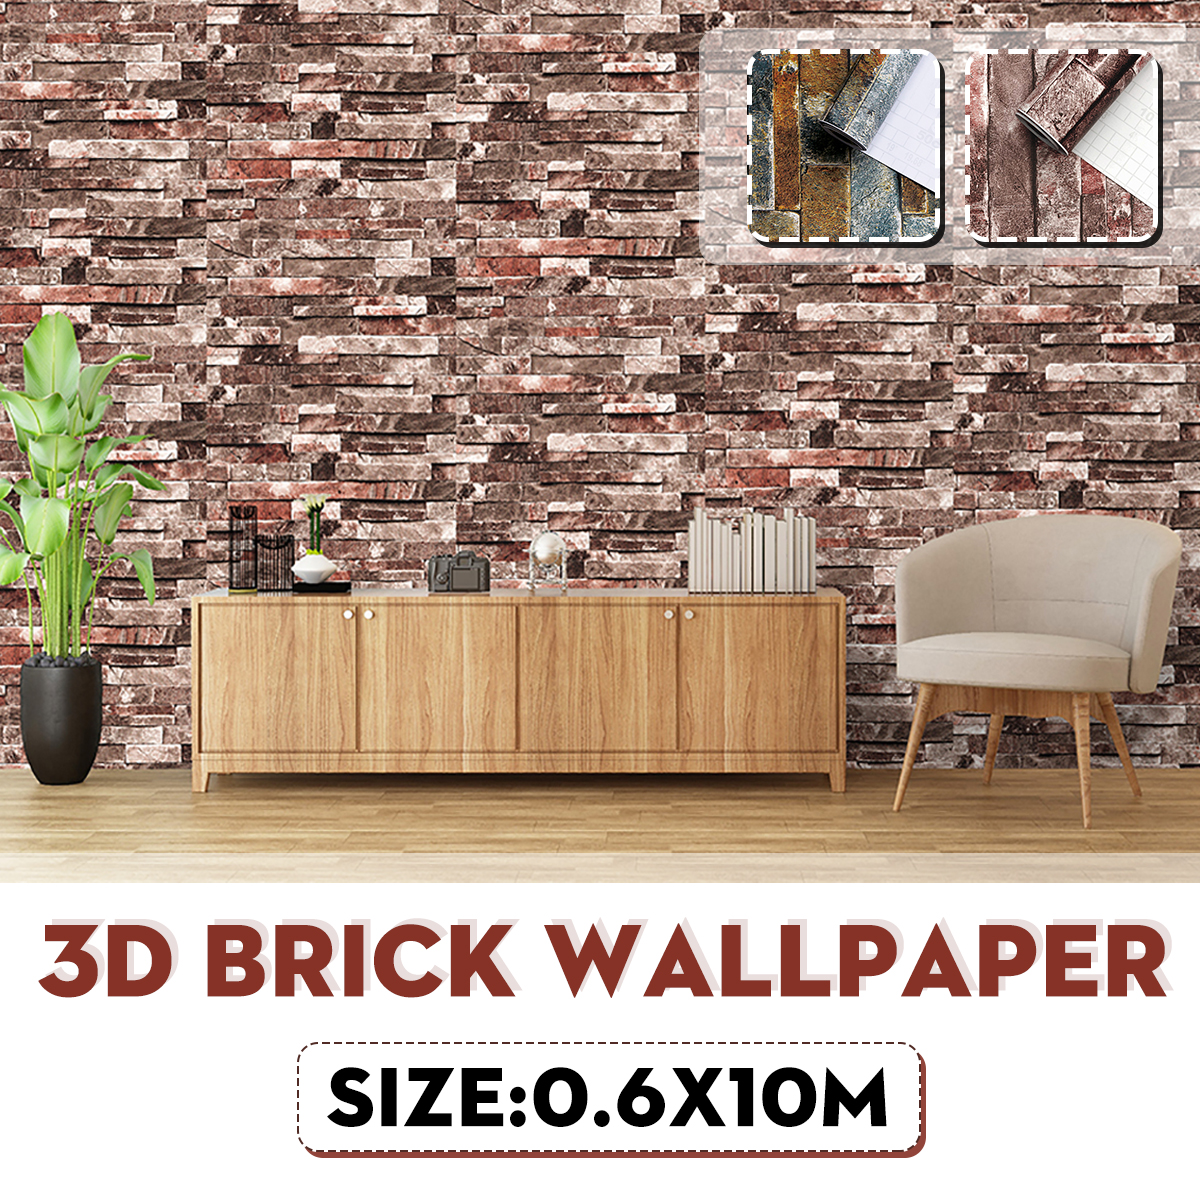 06x10M-Brick-Wallpaper-Wall-Sticker-Waterproof-PVC-Self-Adhesive-For-Desk-Room-1813110-1